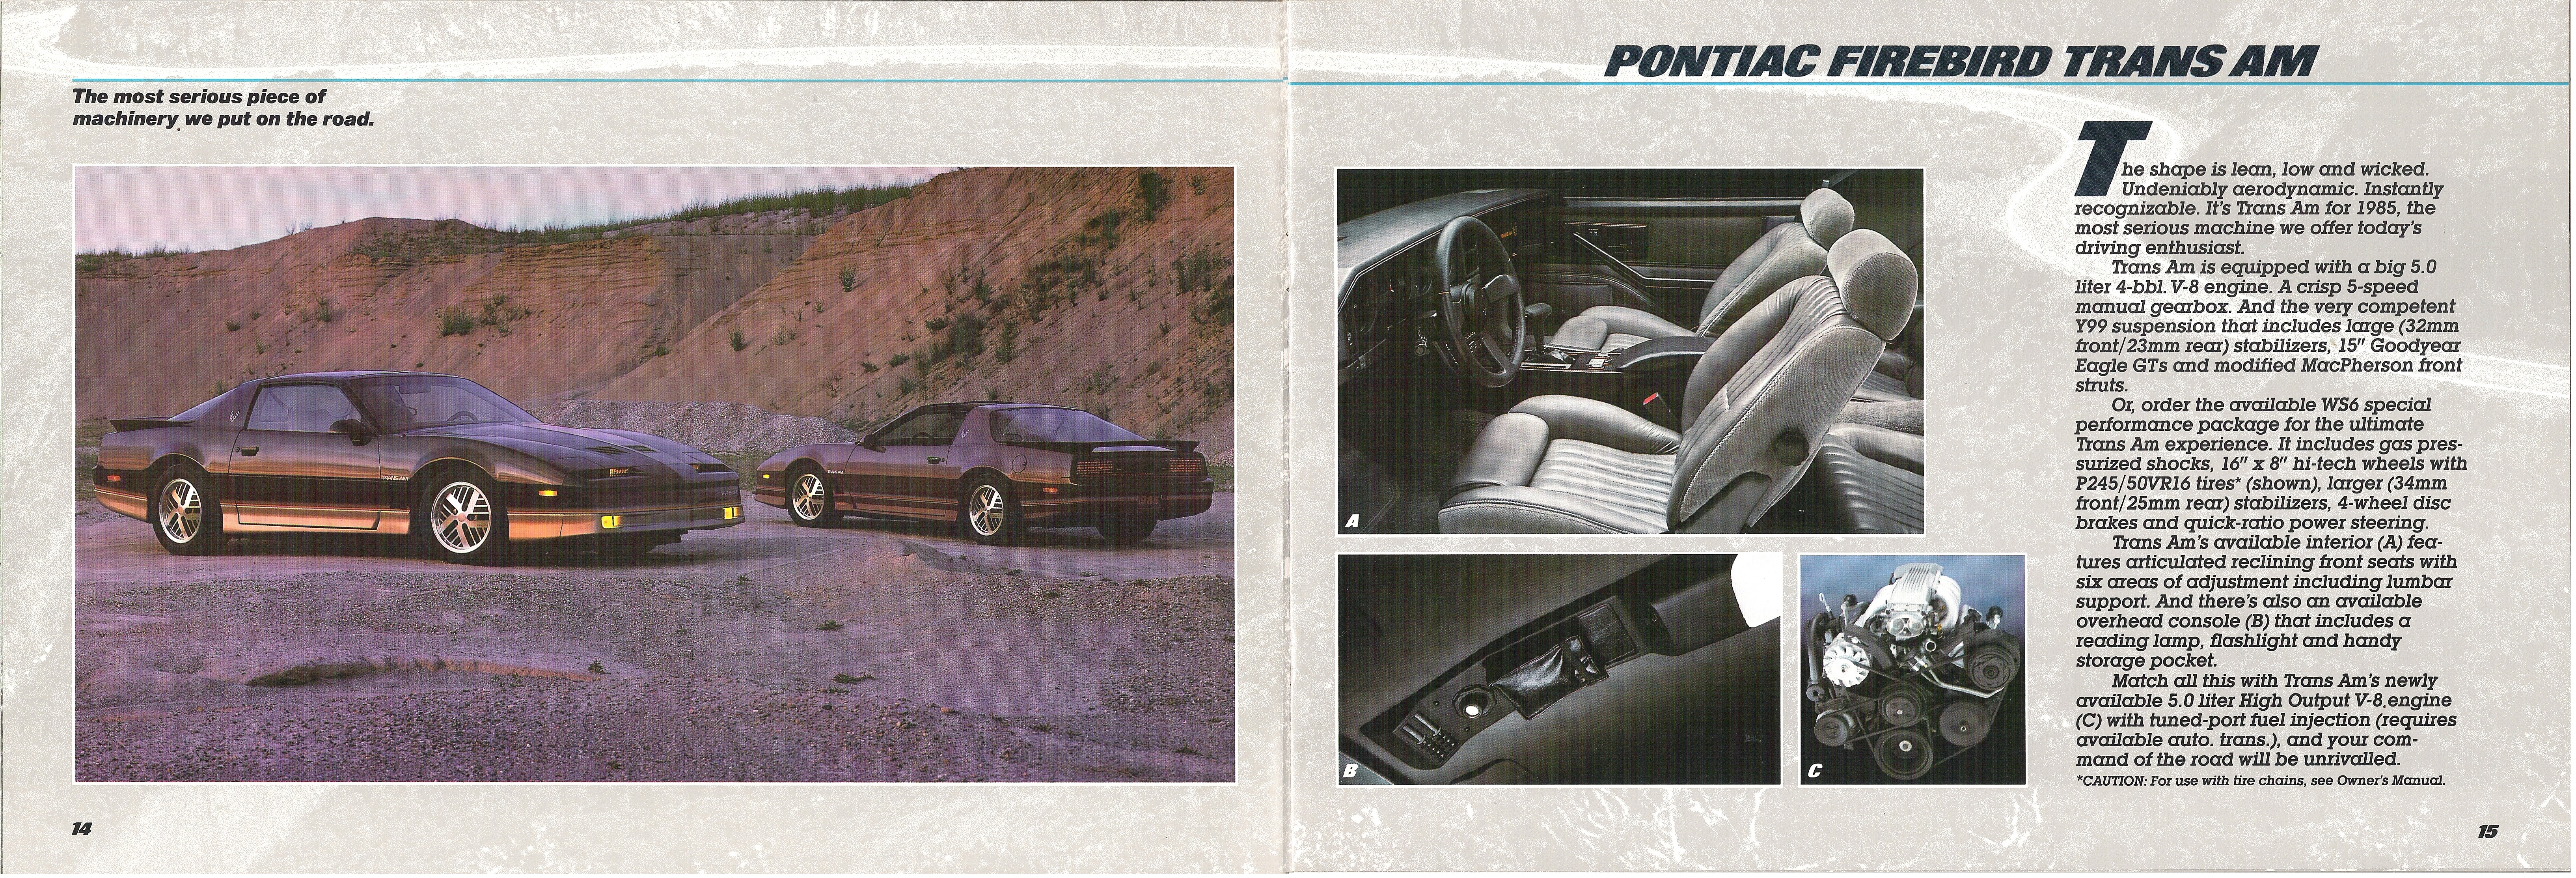 1985 Pontiac Full Line 14-15